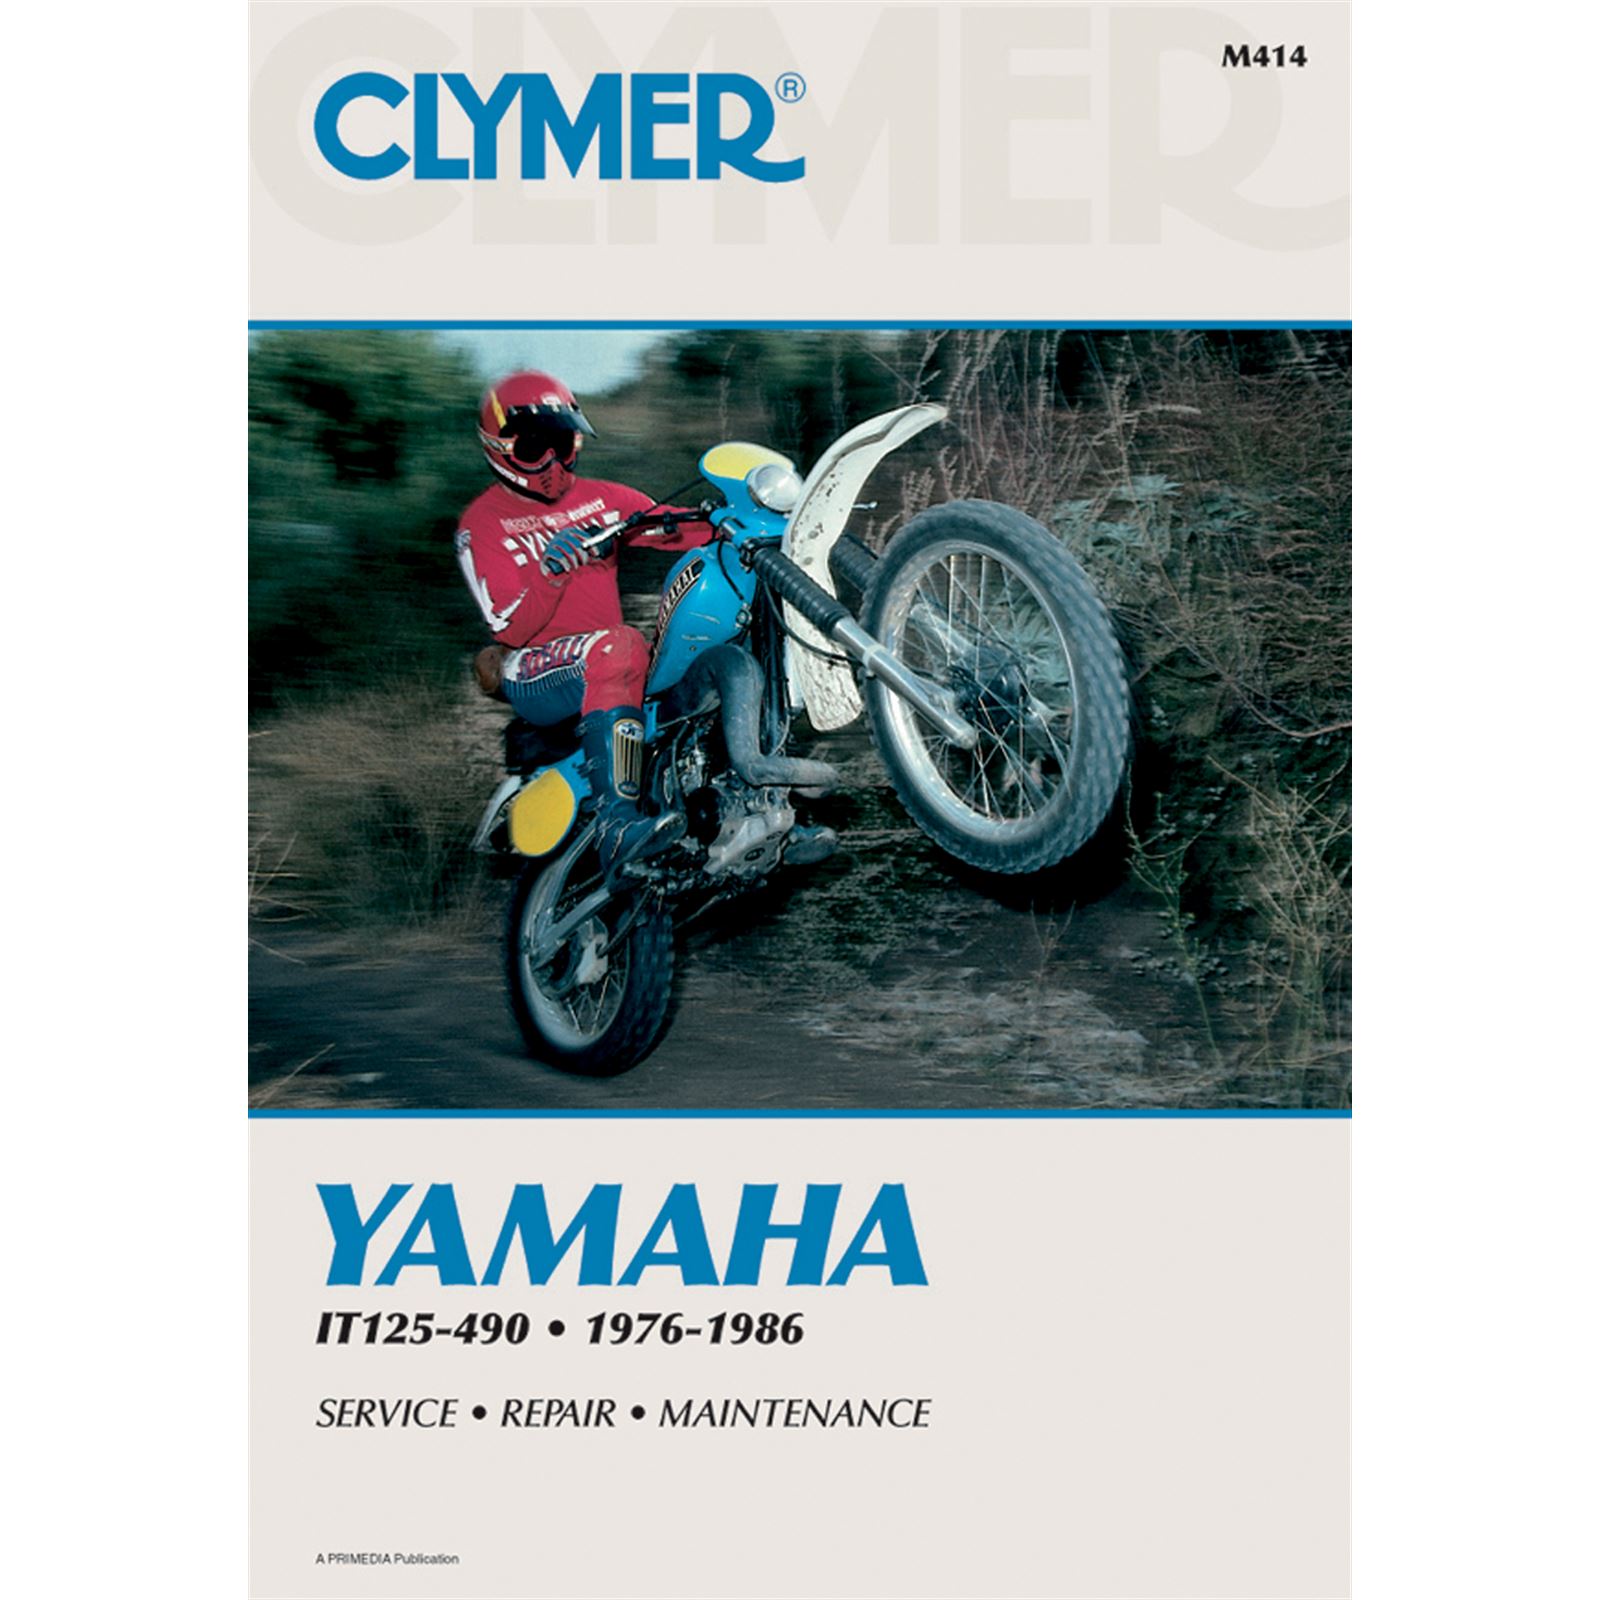 Clymer Manual for Yamaha IT125-490